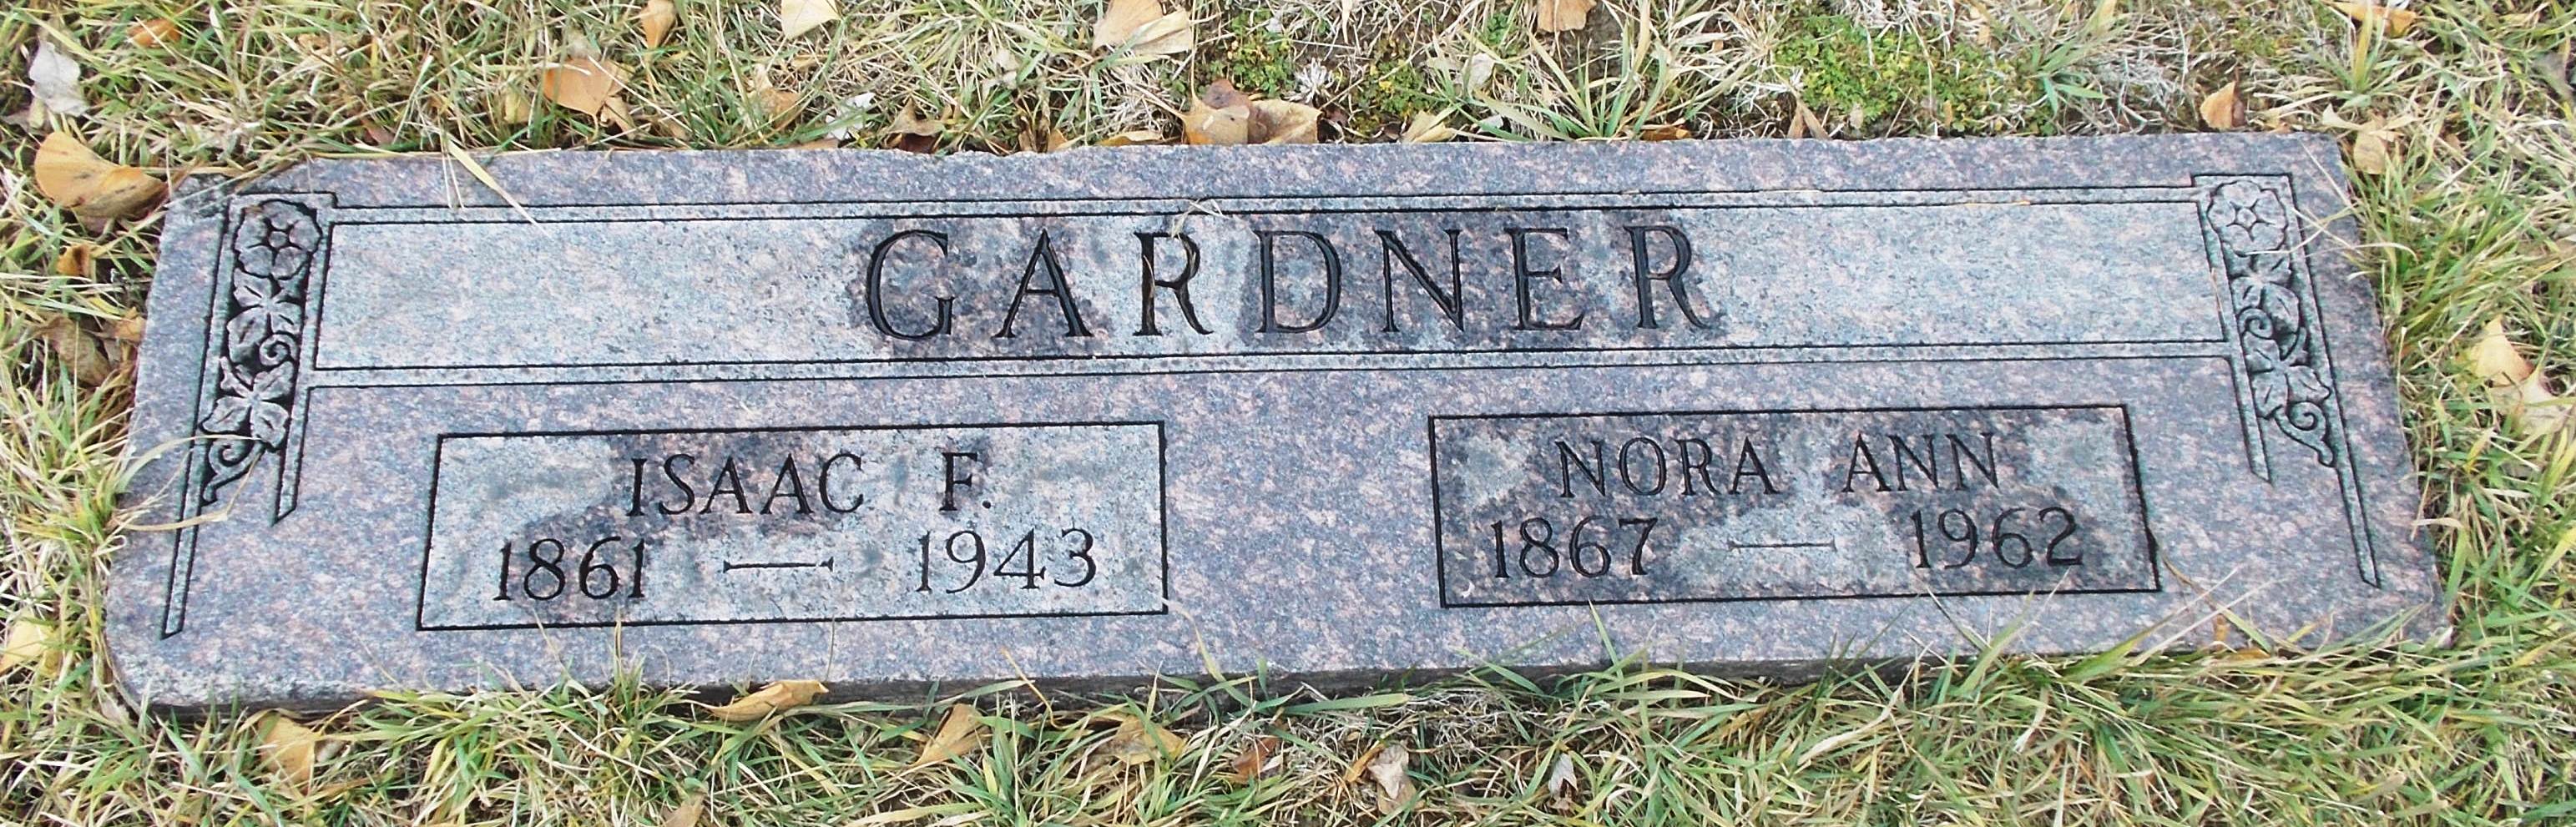 Nora Ann Gardner